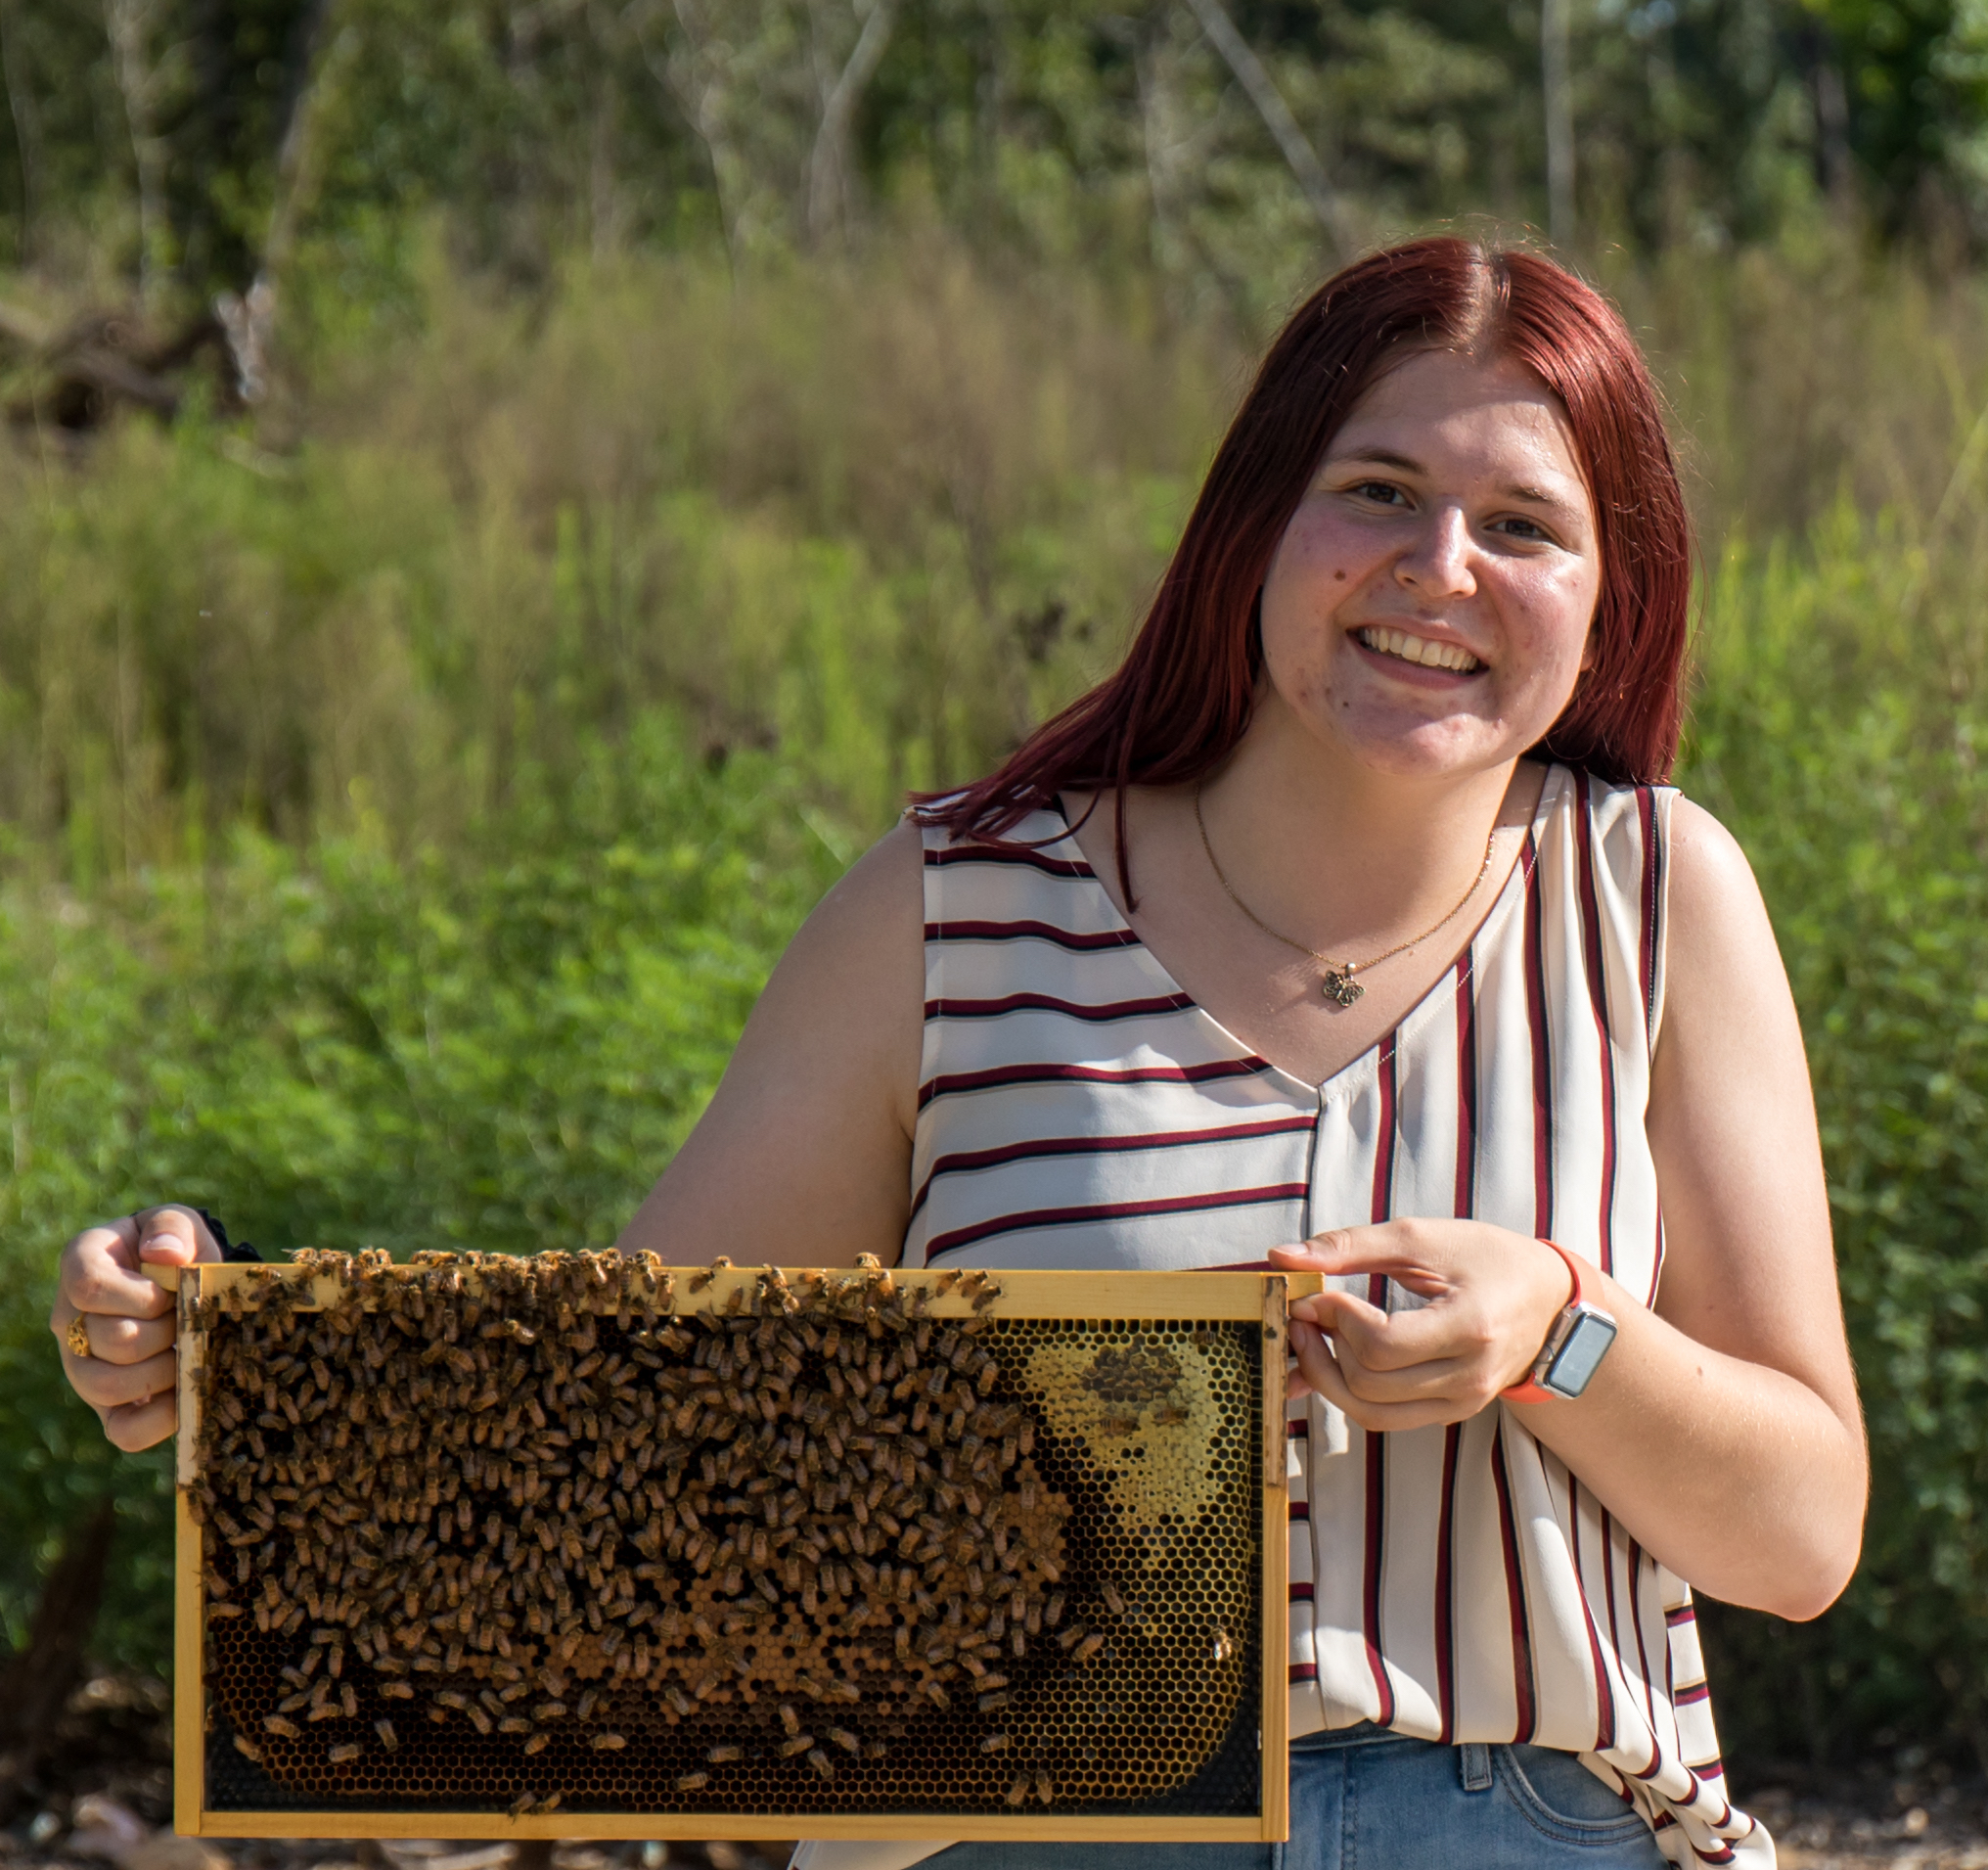 Maritza with bees